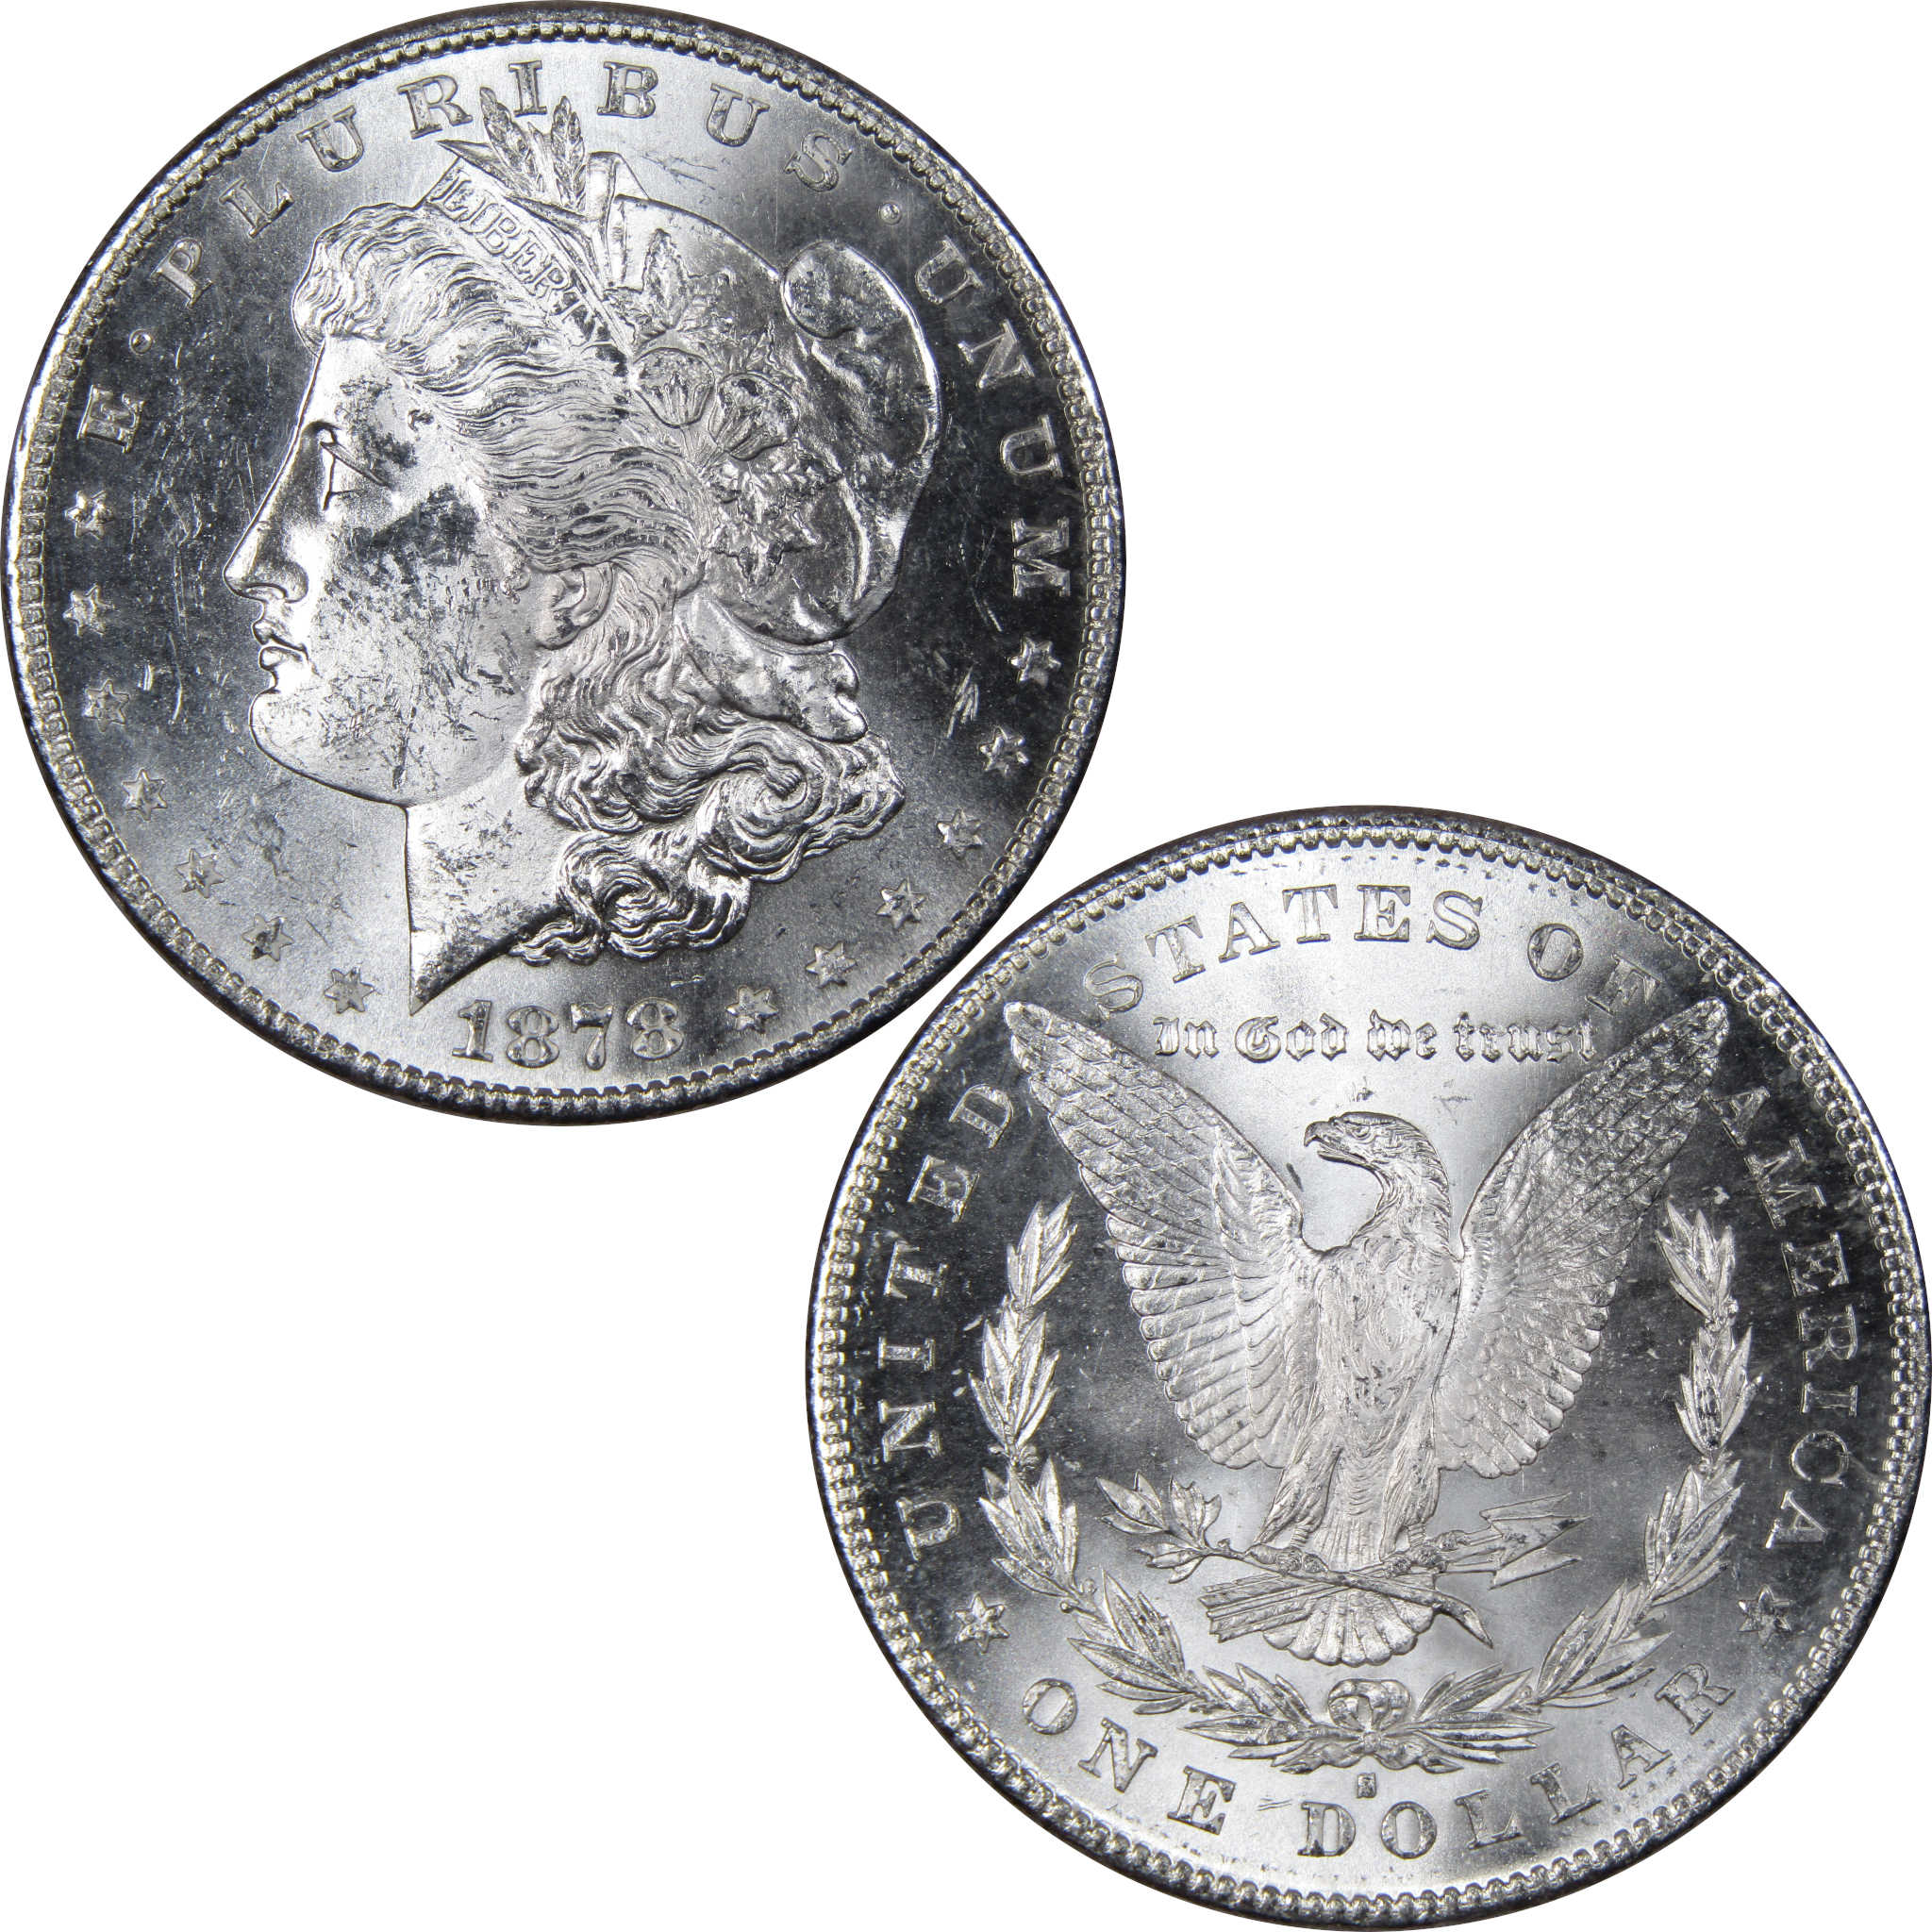 1878 S Morgan Dollar BU Uncirculated Mint State 90% Silver SKU:IPC8885 - Morgan coin - Morgan silver dollar - Morgan silver dollar for sale - Profile Coins &amp; Collectibles